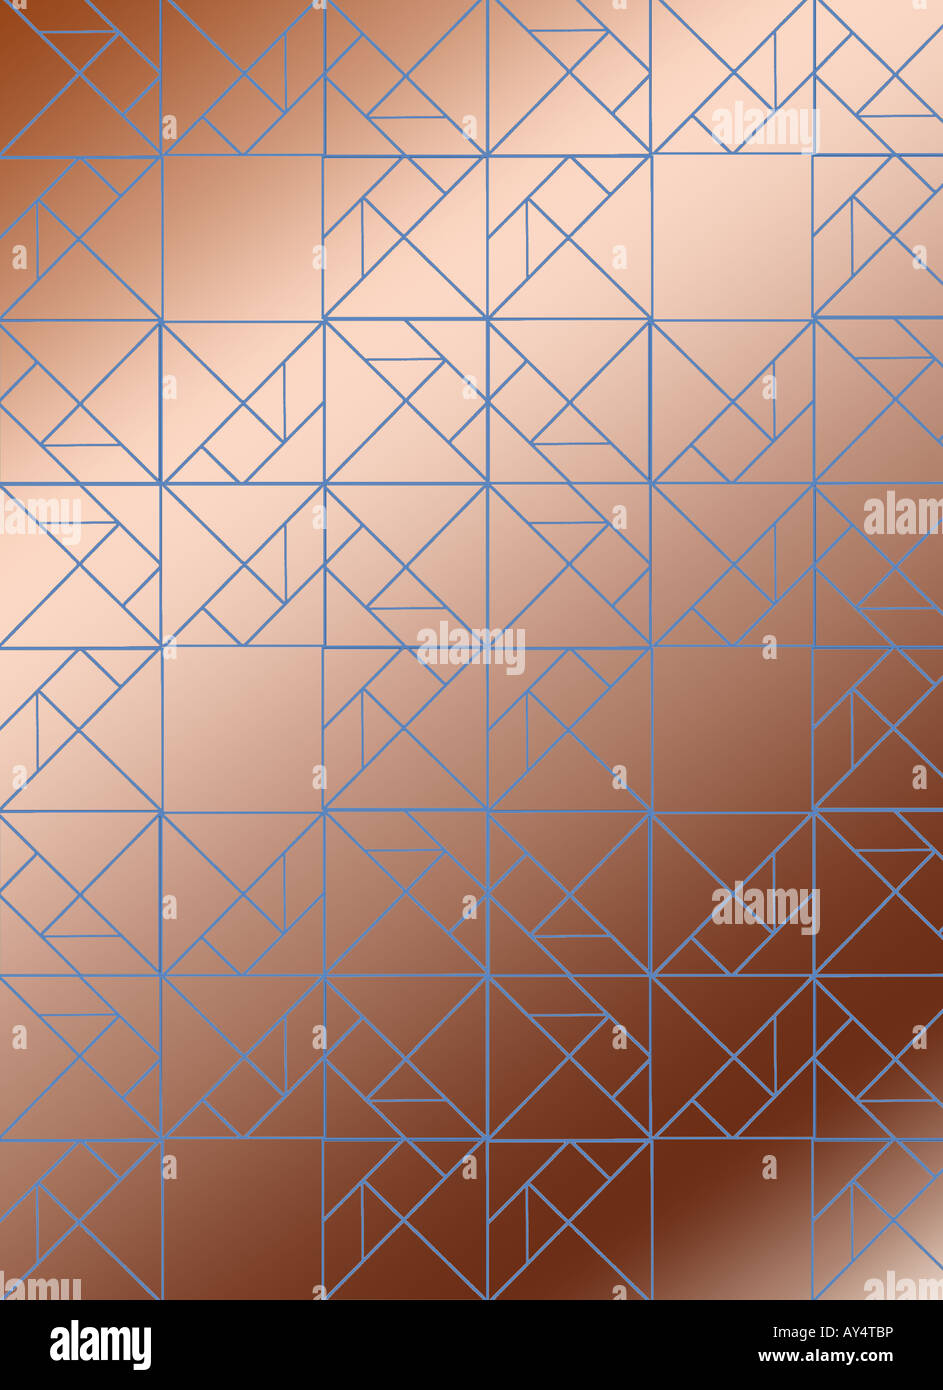 Tangram grid design Stock Photo